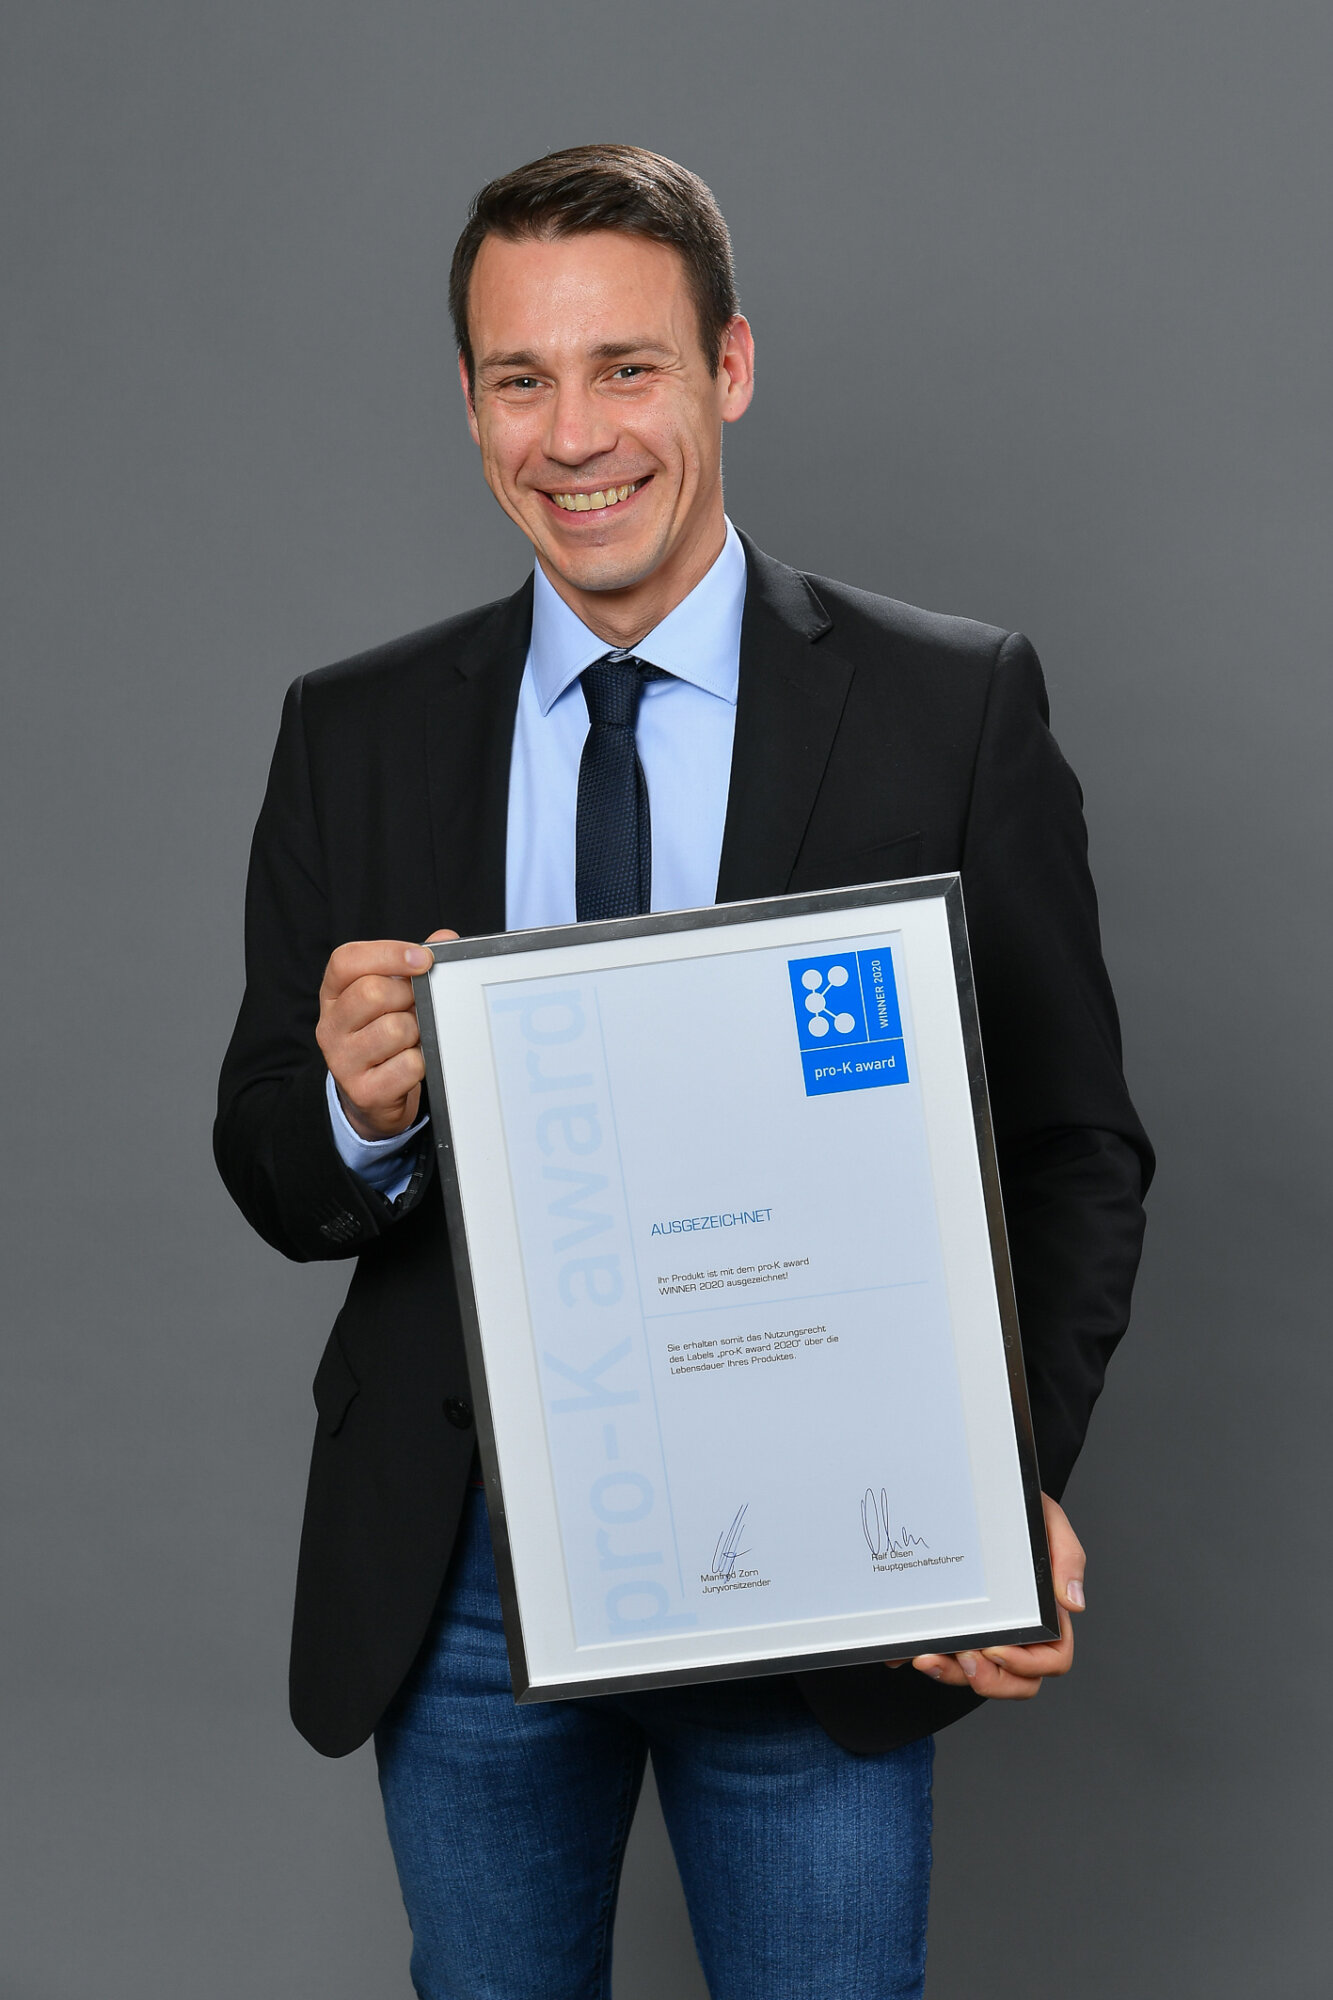 bwh Spezialkoffer award certificate